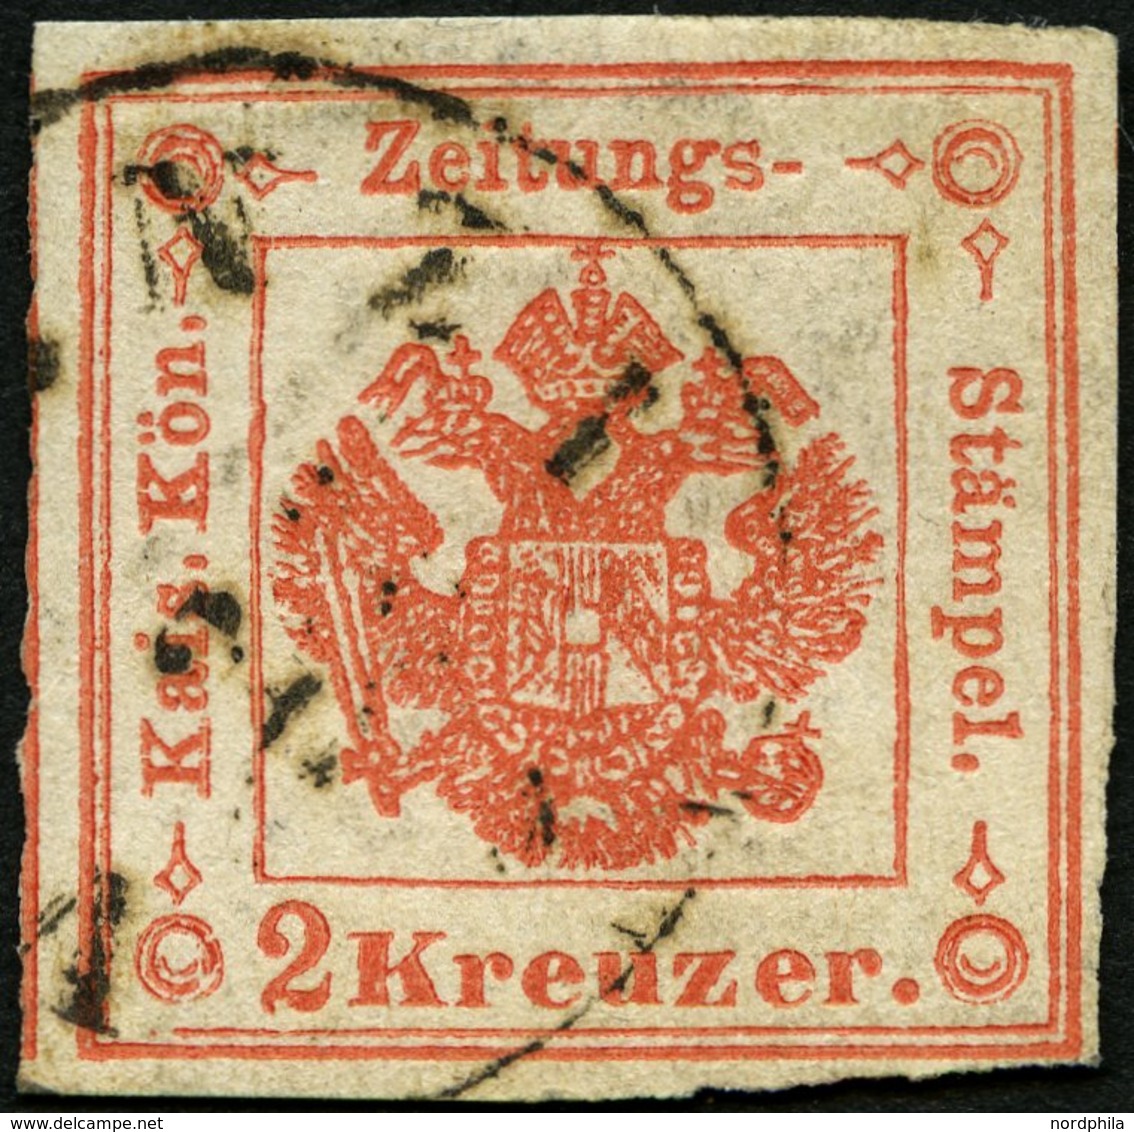 LOMBARDEI UND VENETIEN Z 2 O, Zeitungsmarken: 1859, 2 Kr. Rot, Pracht, Mi. 70.- - Lombardo-Vénétie